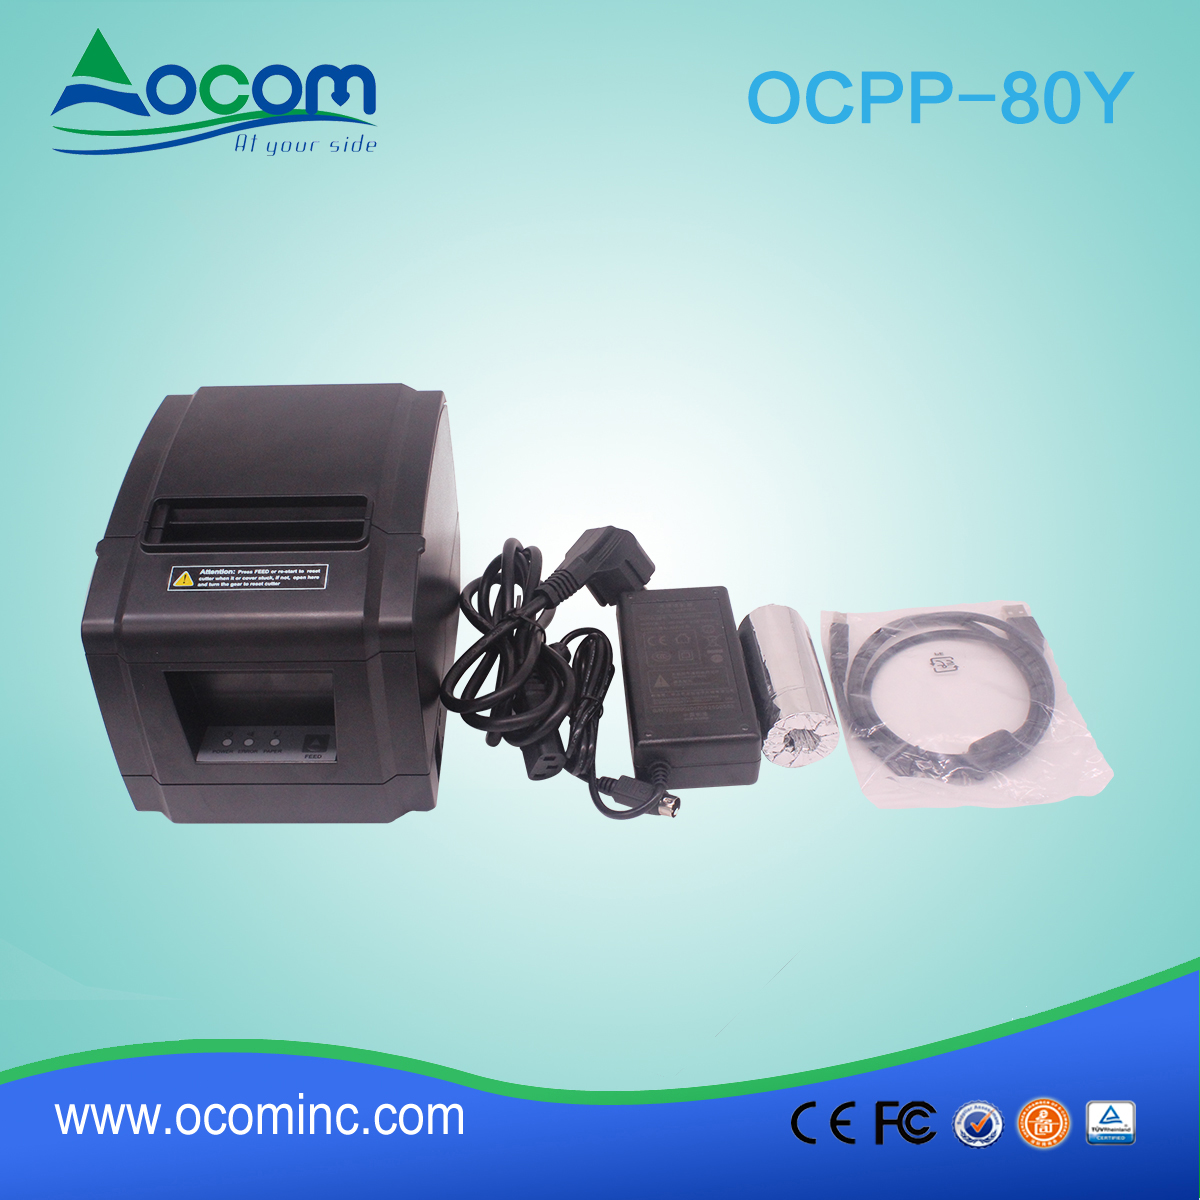 OCPP-80Y-faible coût 80mm imprimante de reçus thermique vente chaude